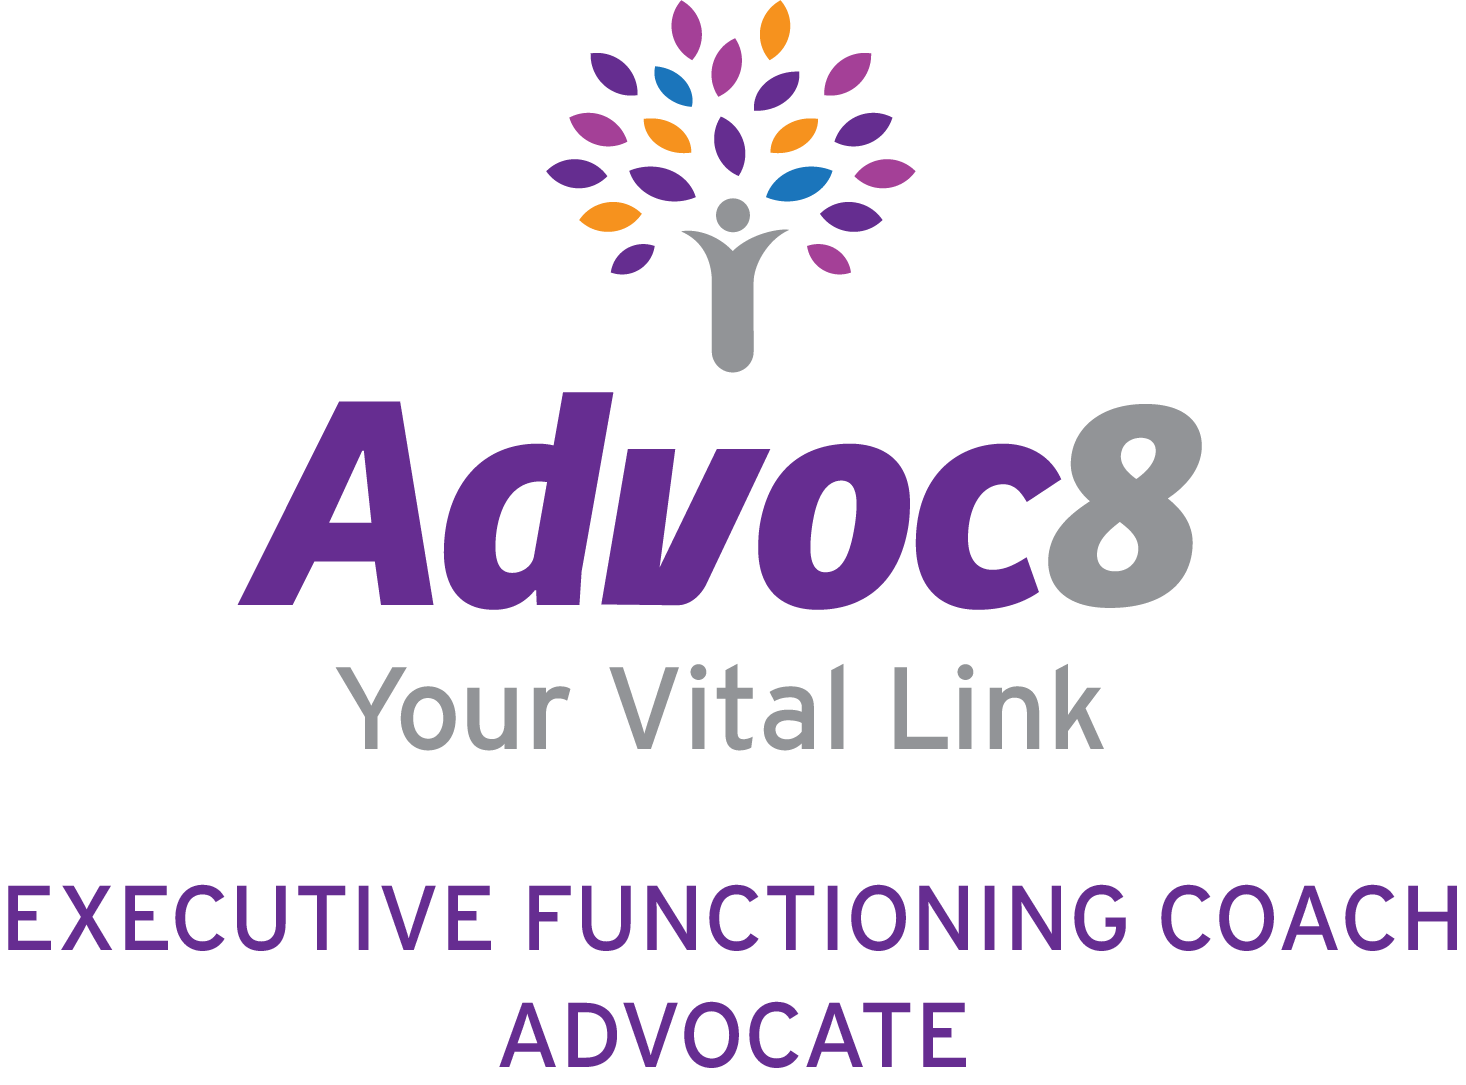 Advoc8: Your Vital Link